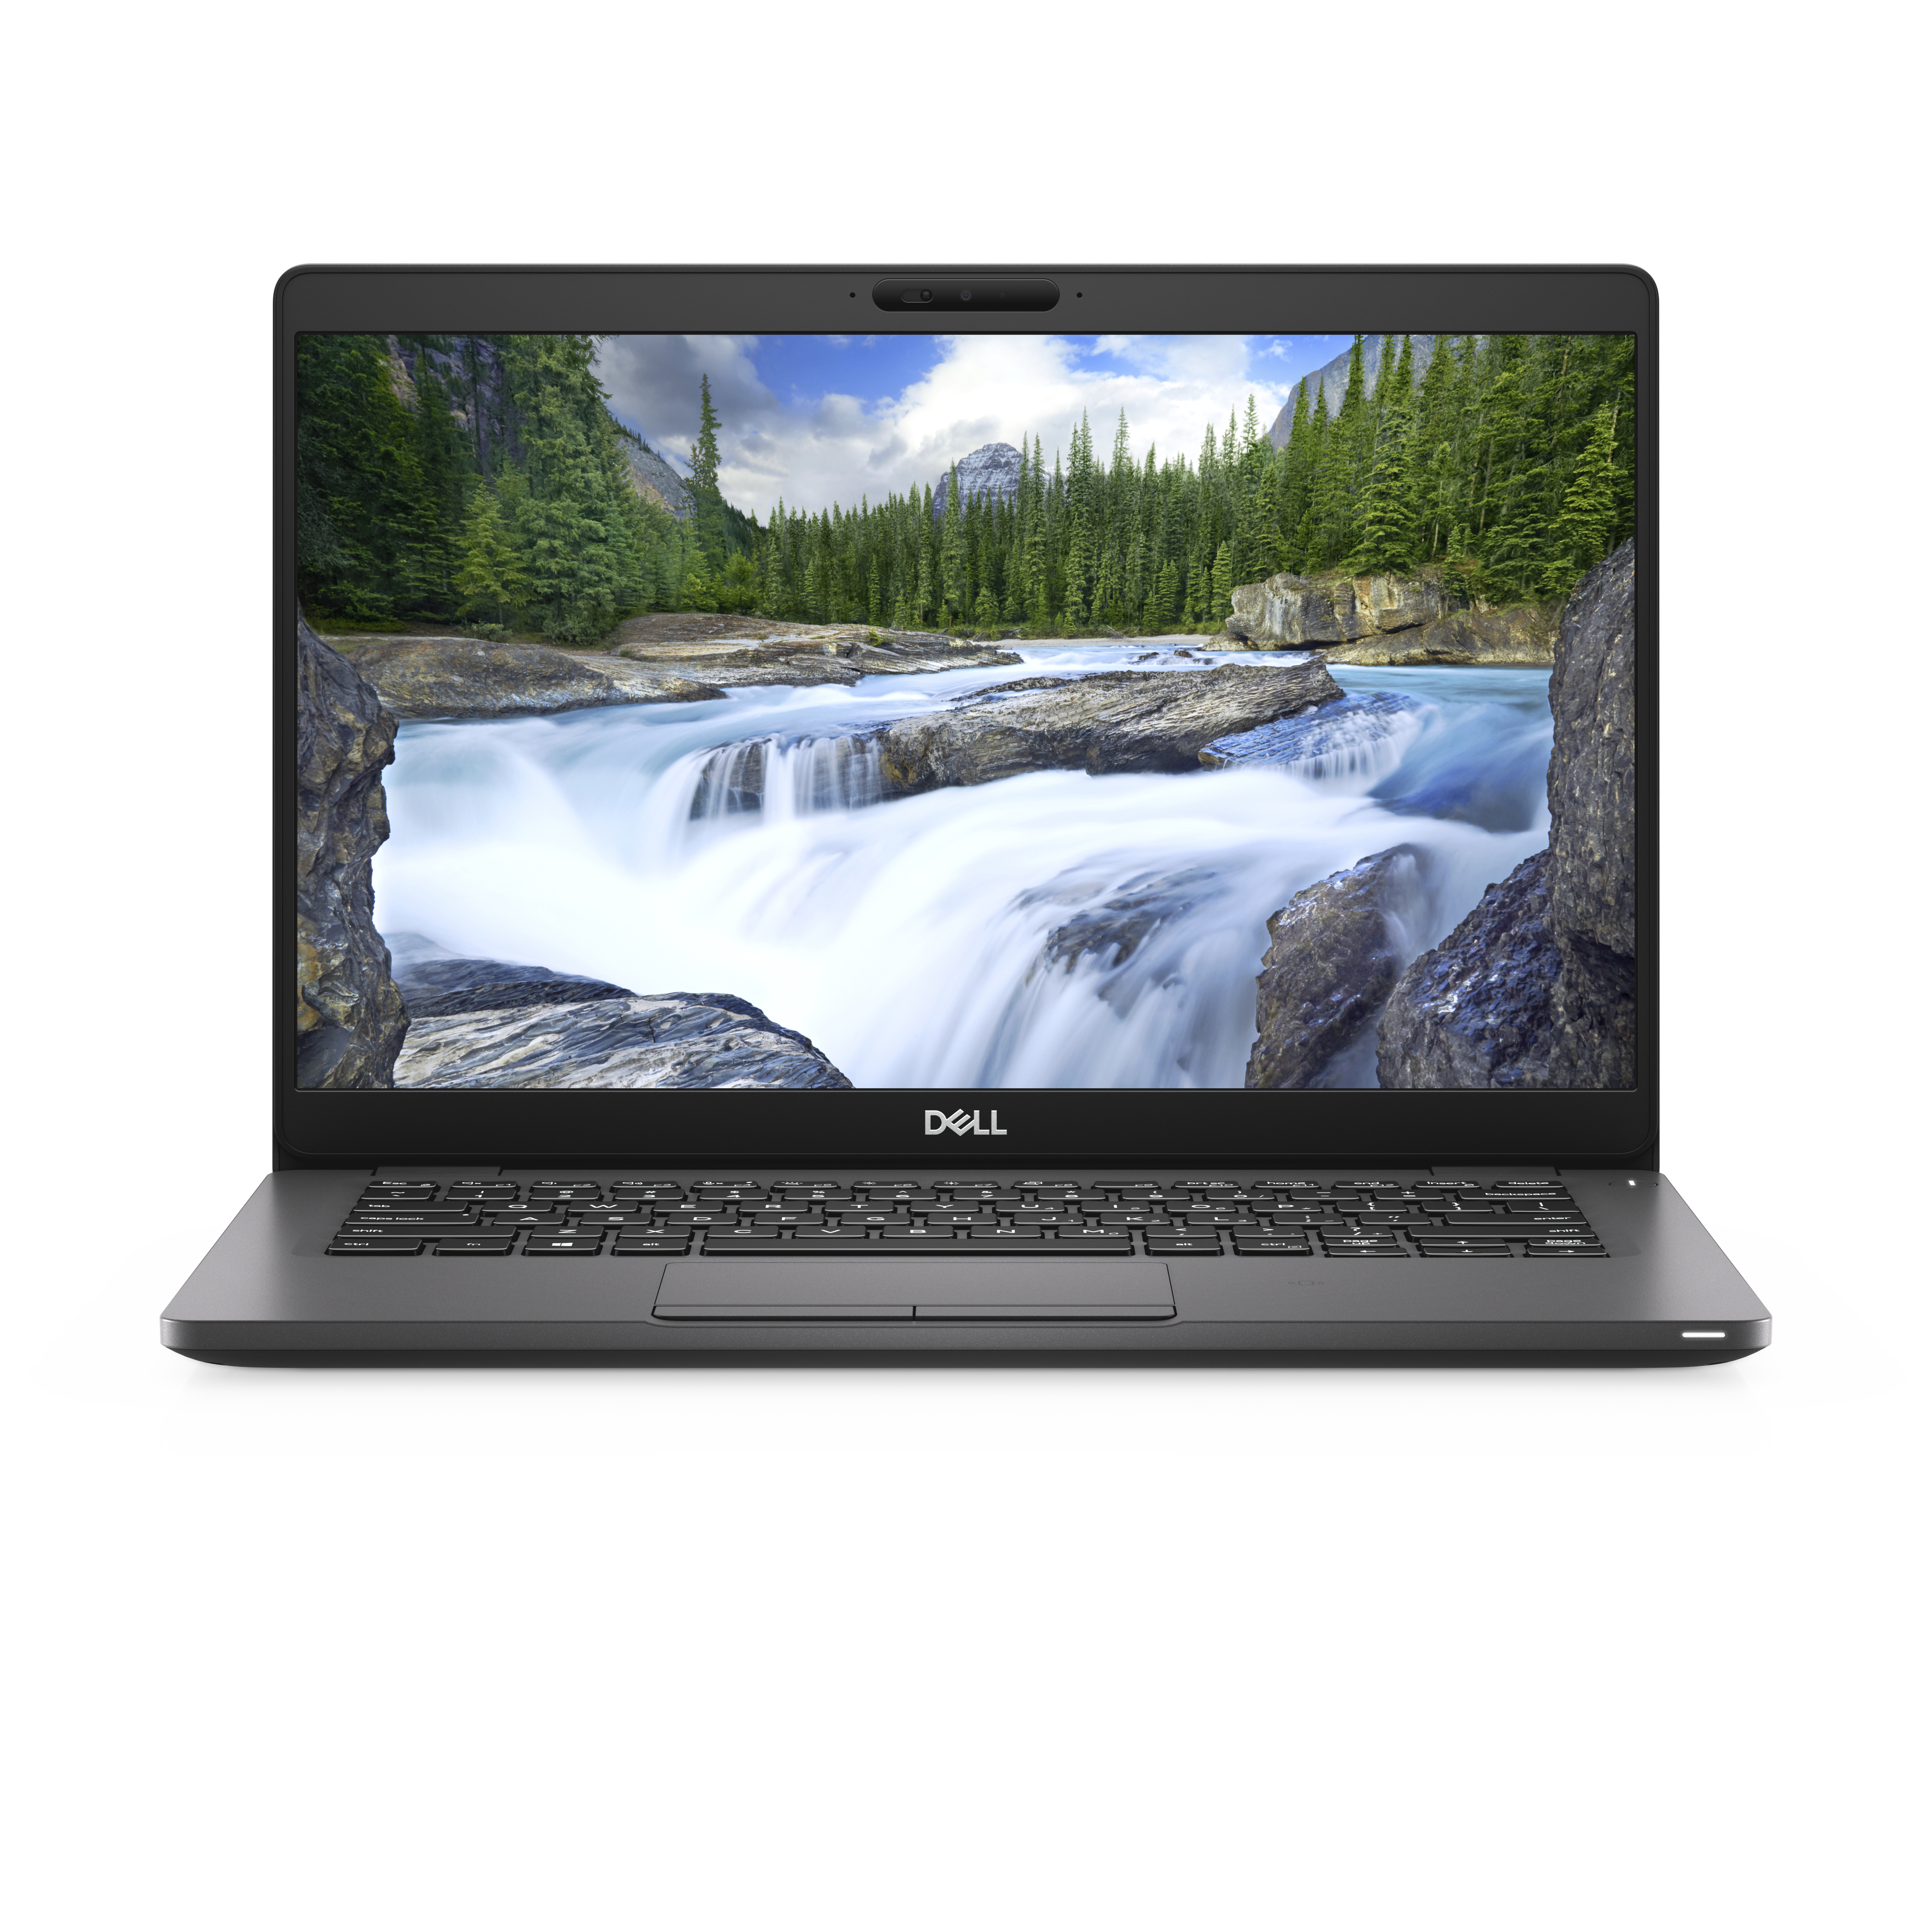 Dell Latitude 5300 refurbished laptops